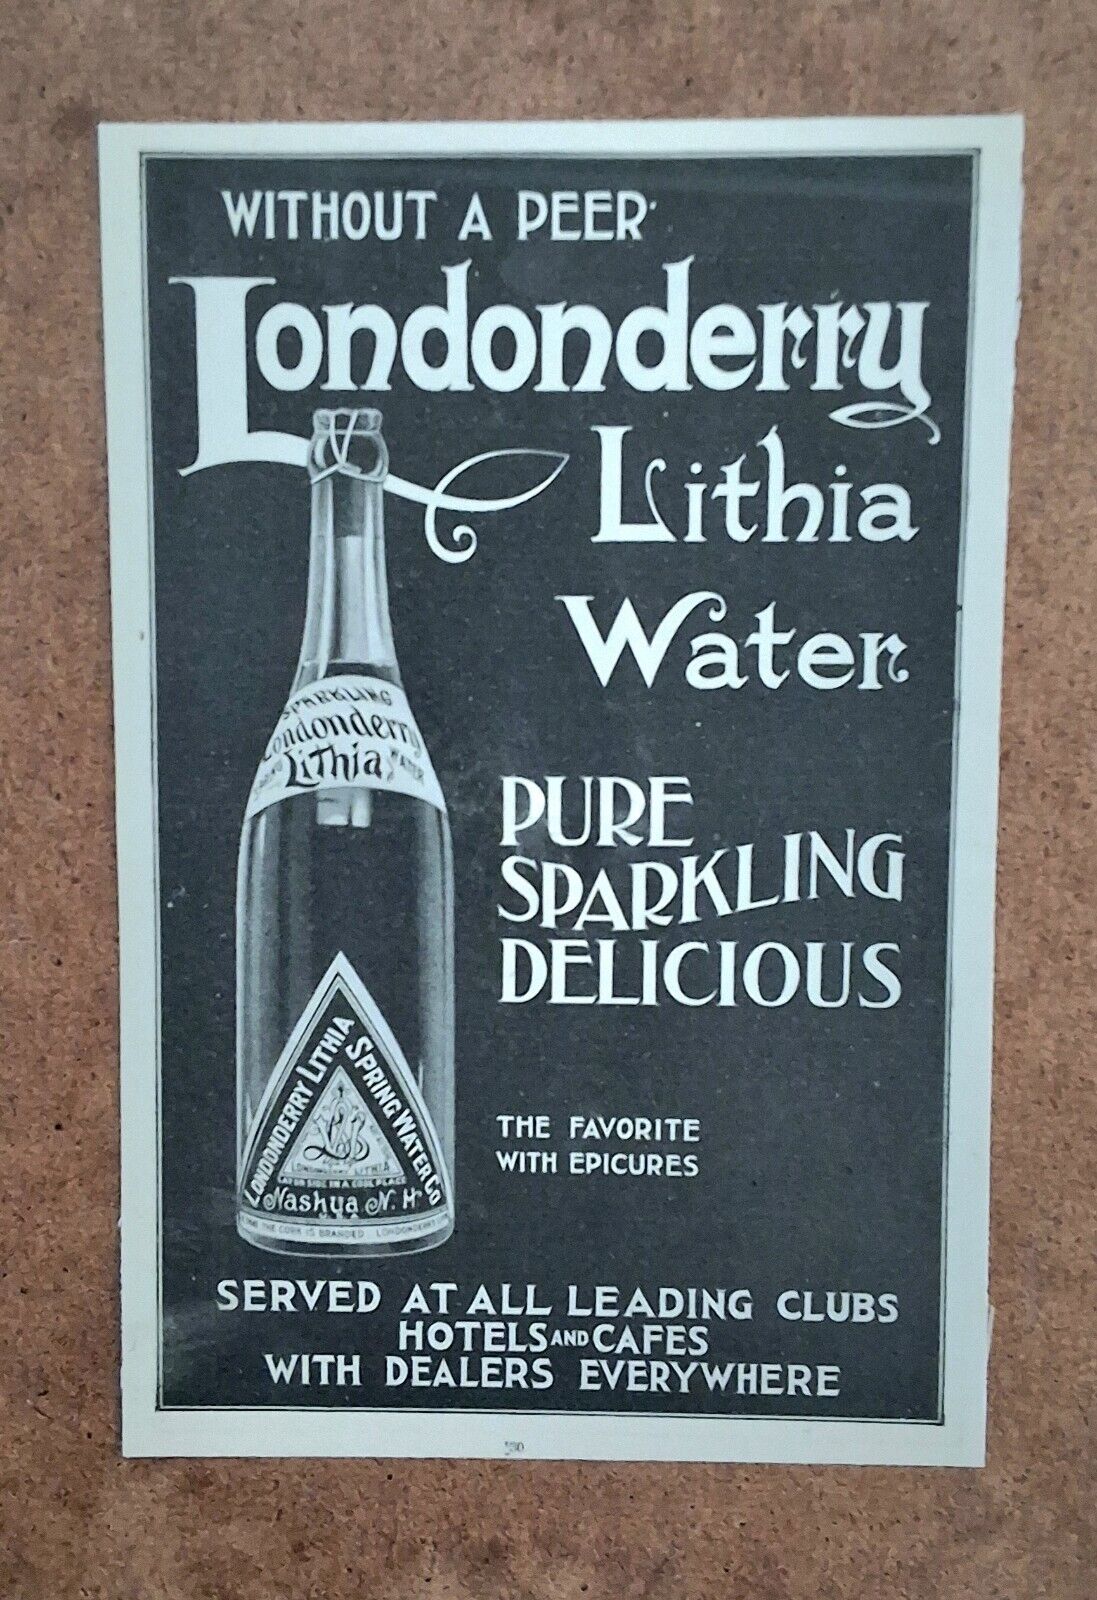 Antique Londonderry Sparkling Lithia Bottle Water - 1899-1903 Art AD LOT Decor